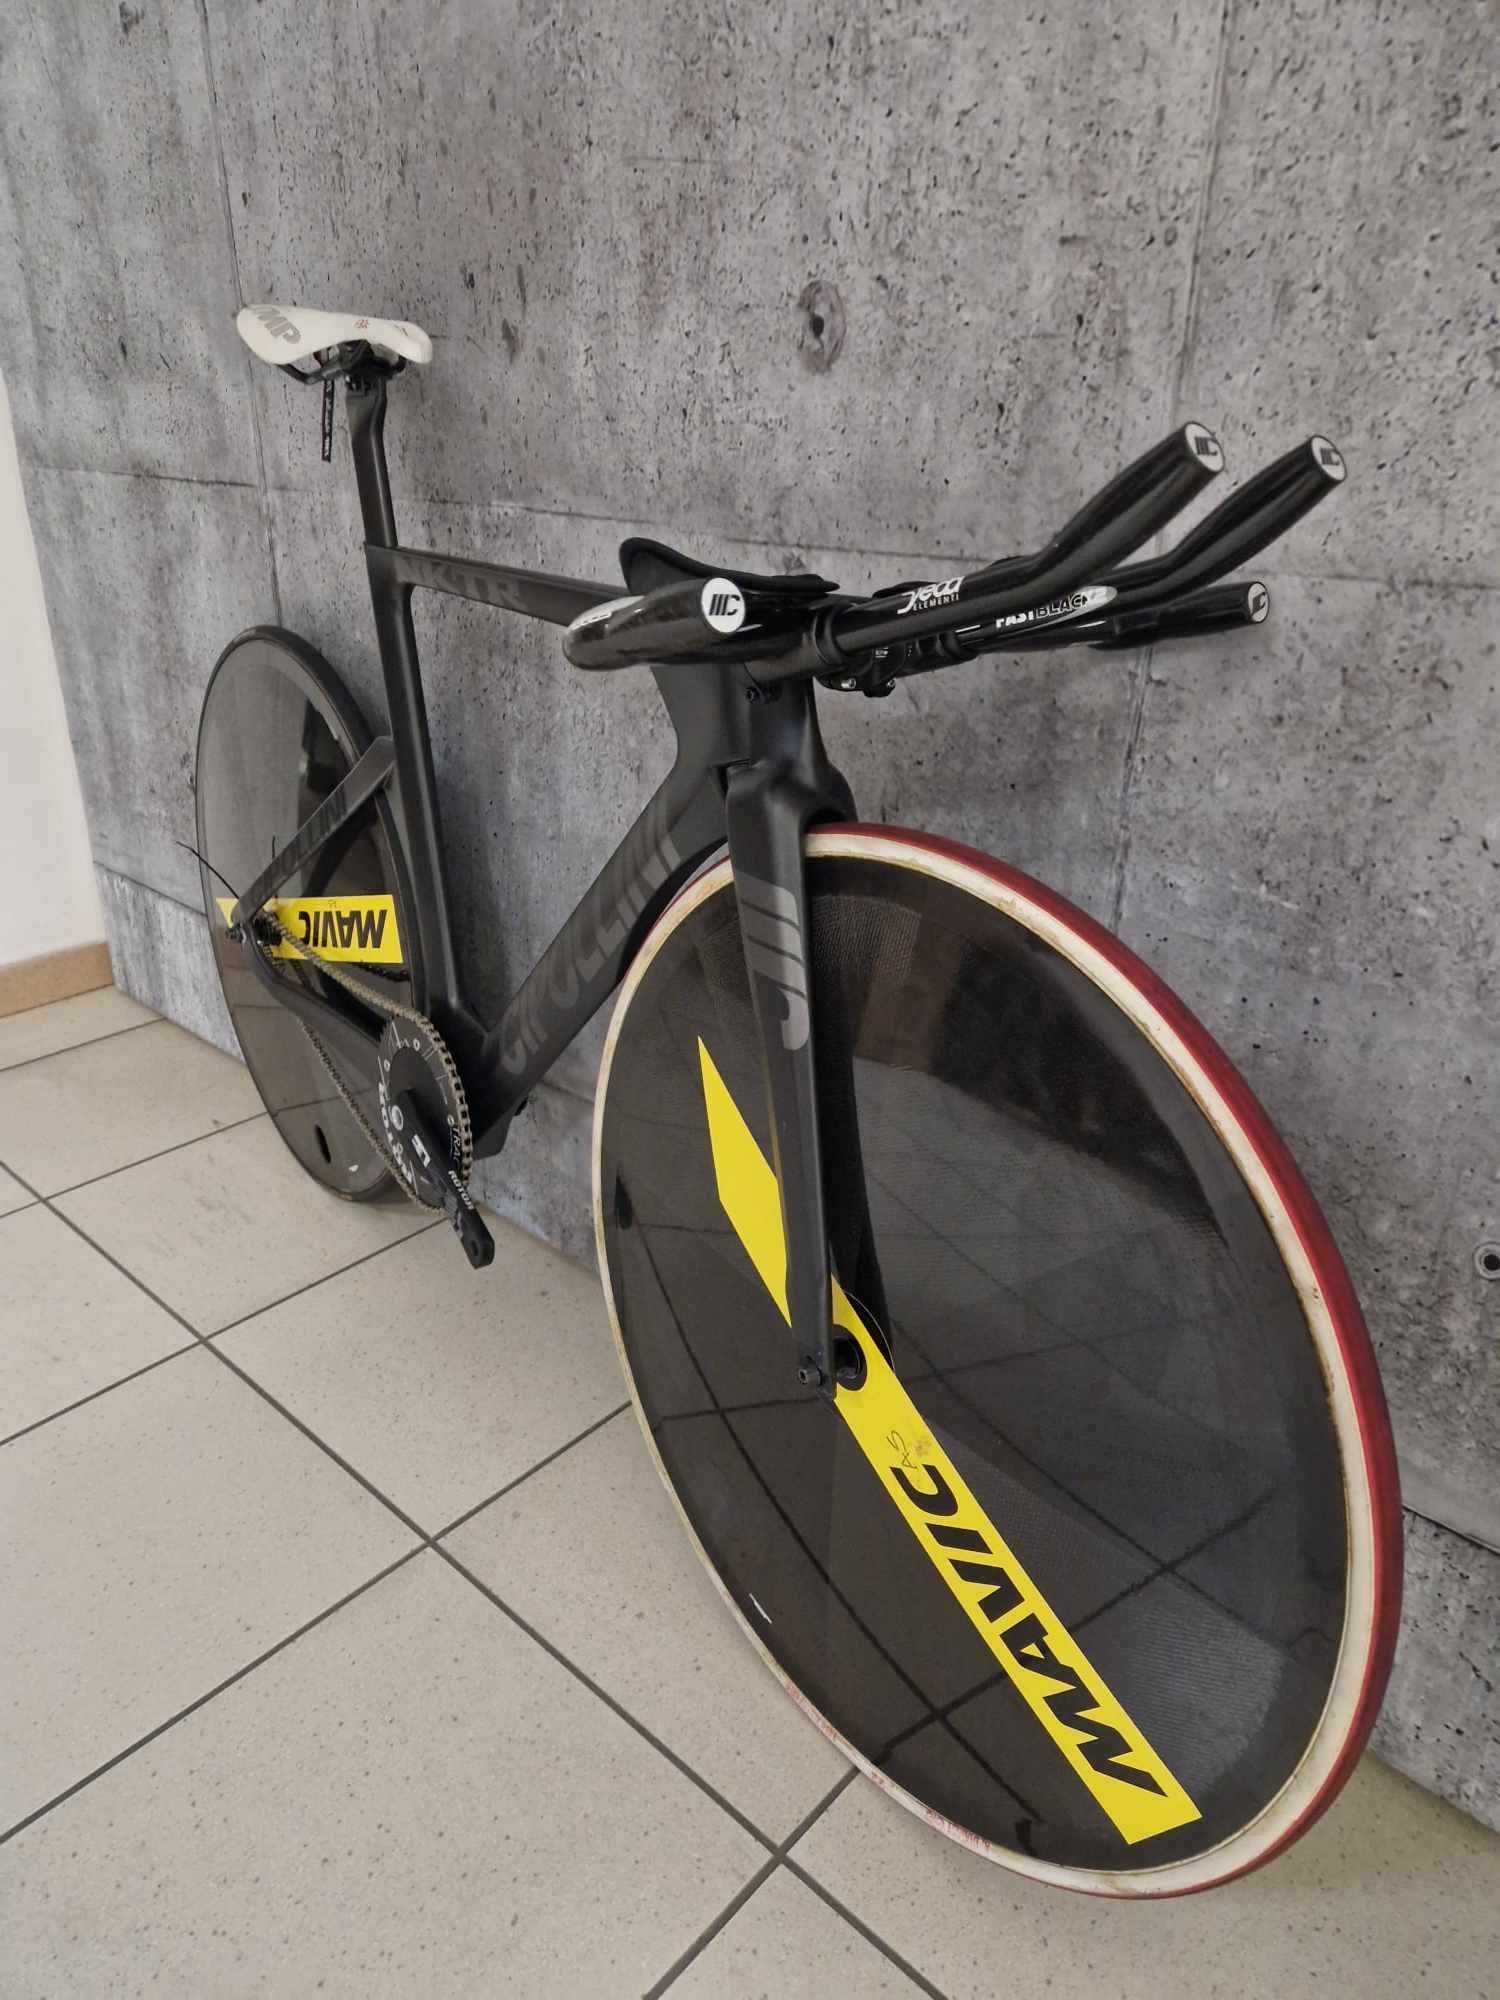 nowy rower torowy Cipollini NKTR M deda carbon f vat